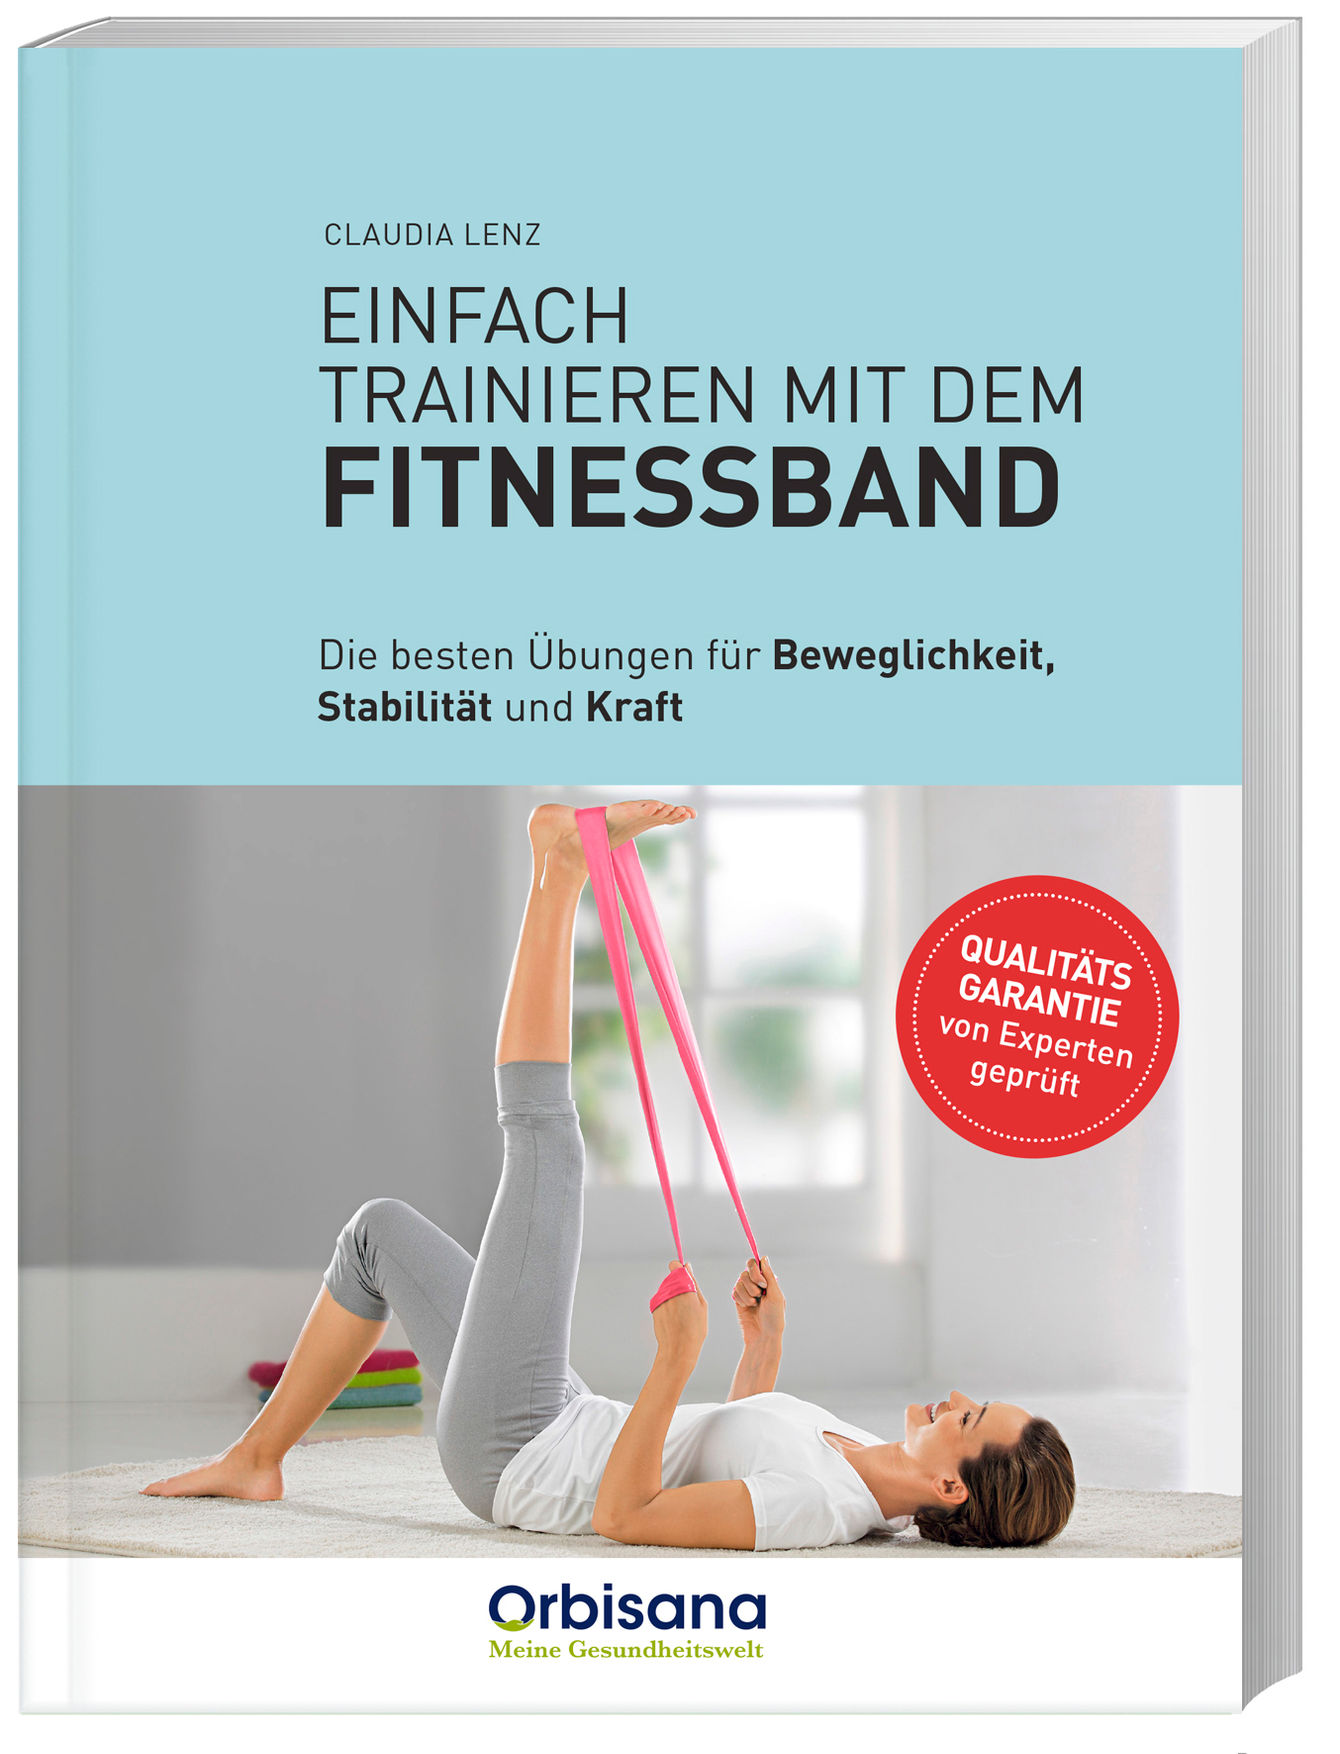 Orbisana Fitnessband-Set inkl. Ratgeber online kaufen - Orbisana